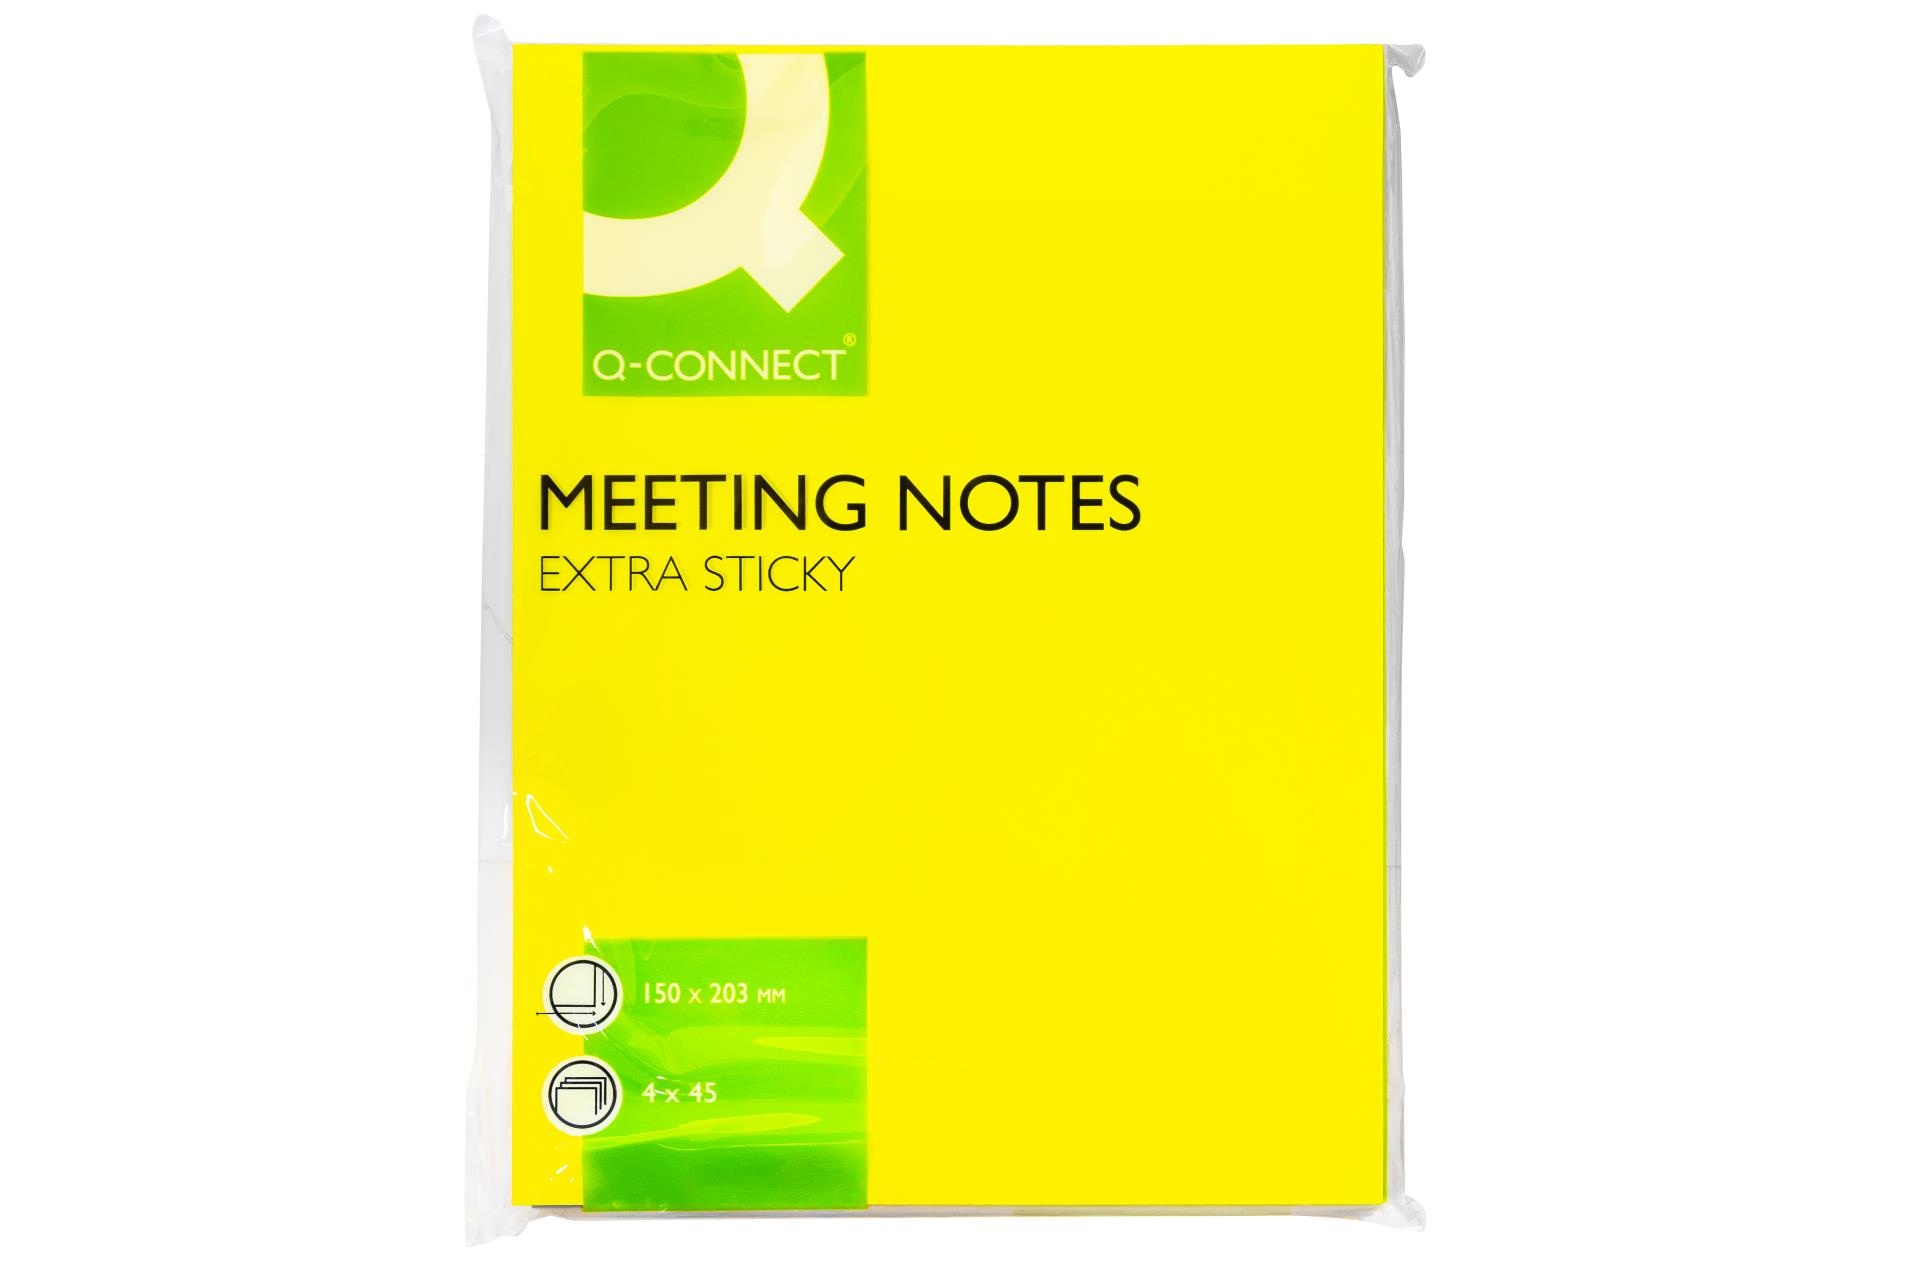 Bločky Q-connect Meeting Notes silně lepicí - 150 x 203 mm, mix 4 barev